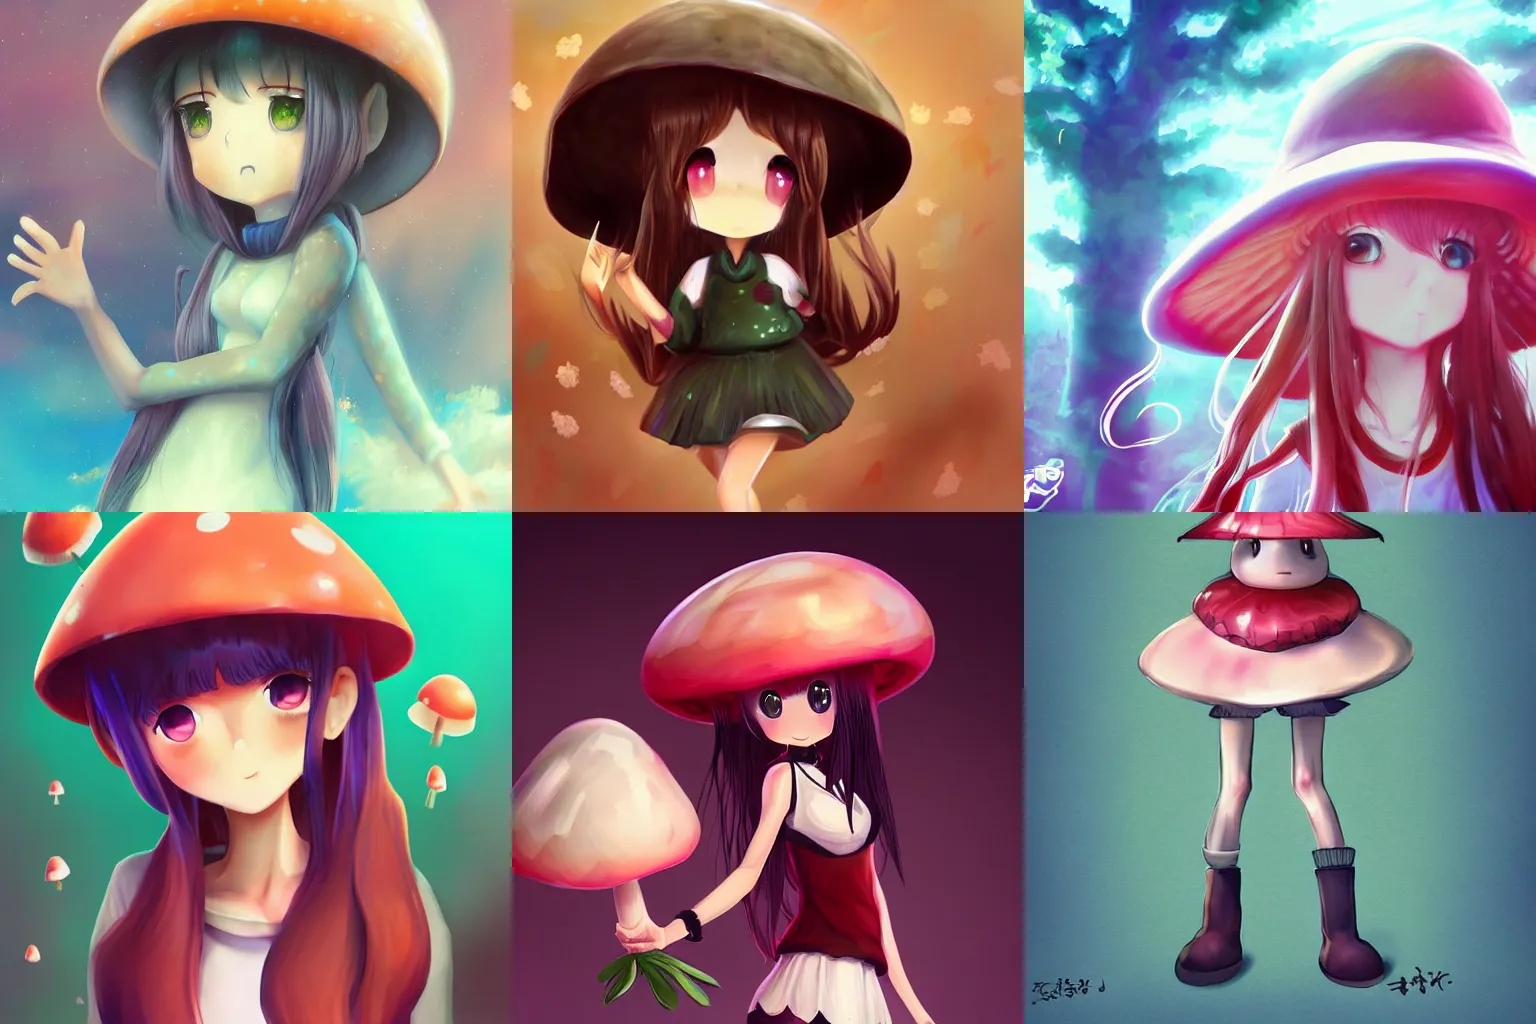 Prompt: mushroom anime girl, upscaled, artstation, sharp focus, digital art